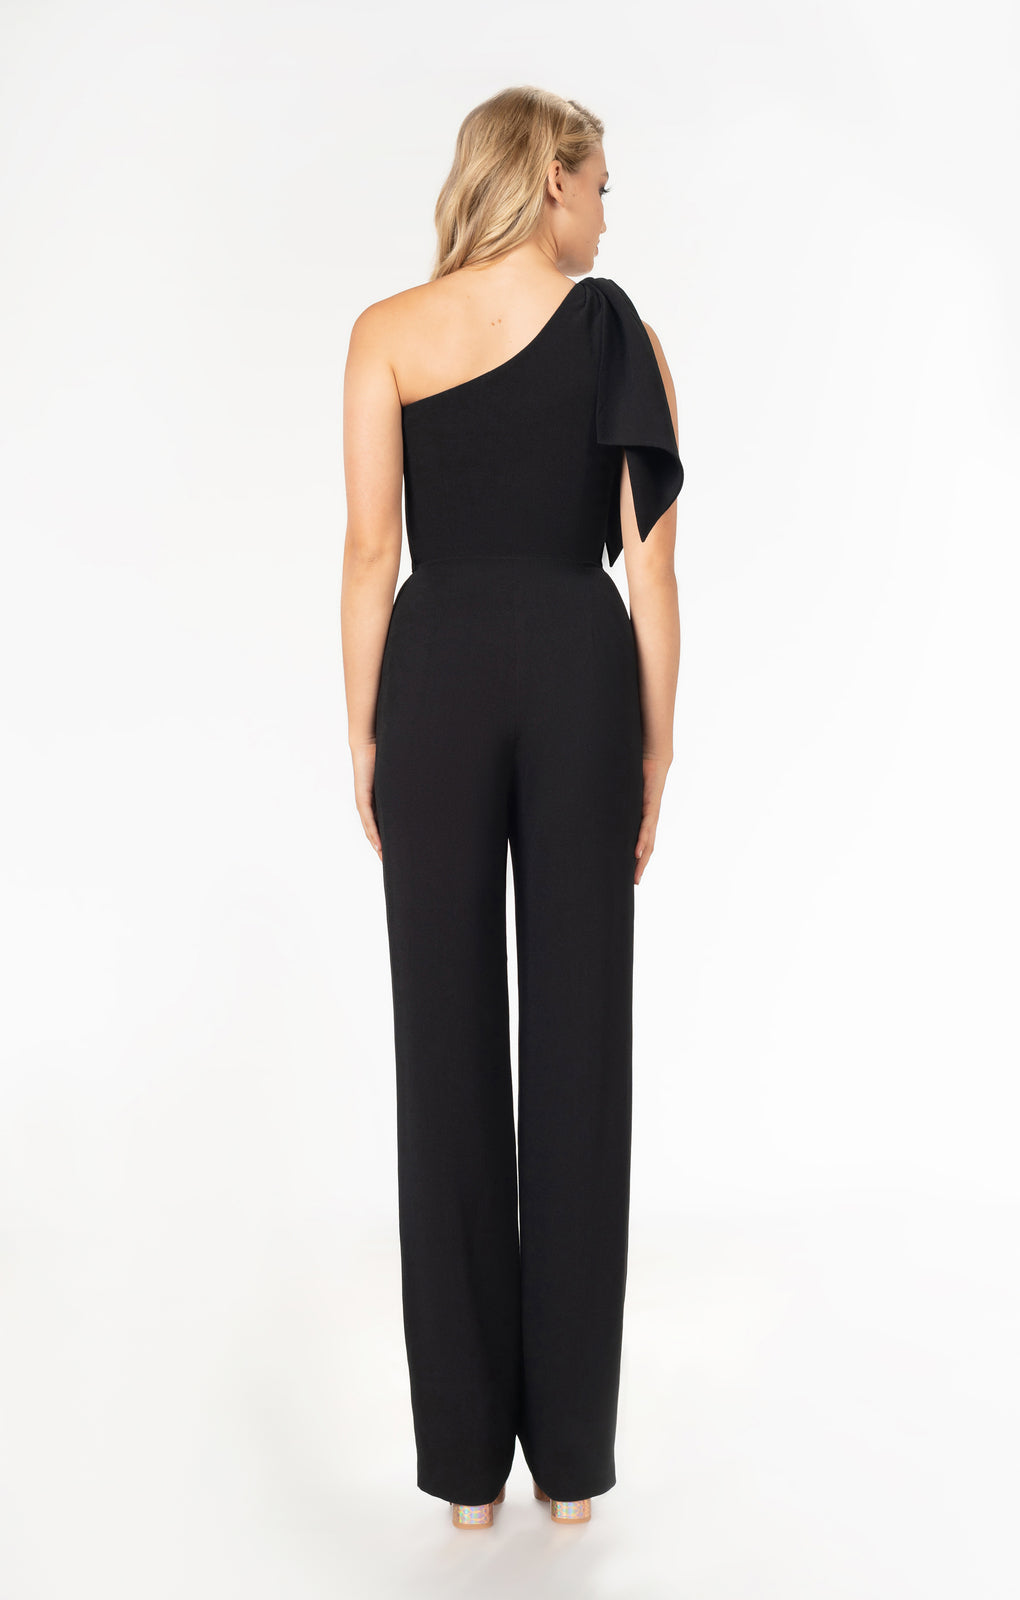 Dress The Population Black Tiffany Jumpsuit product image